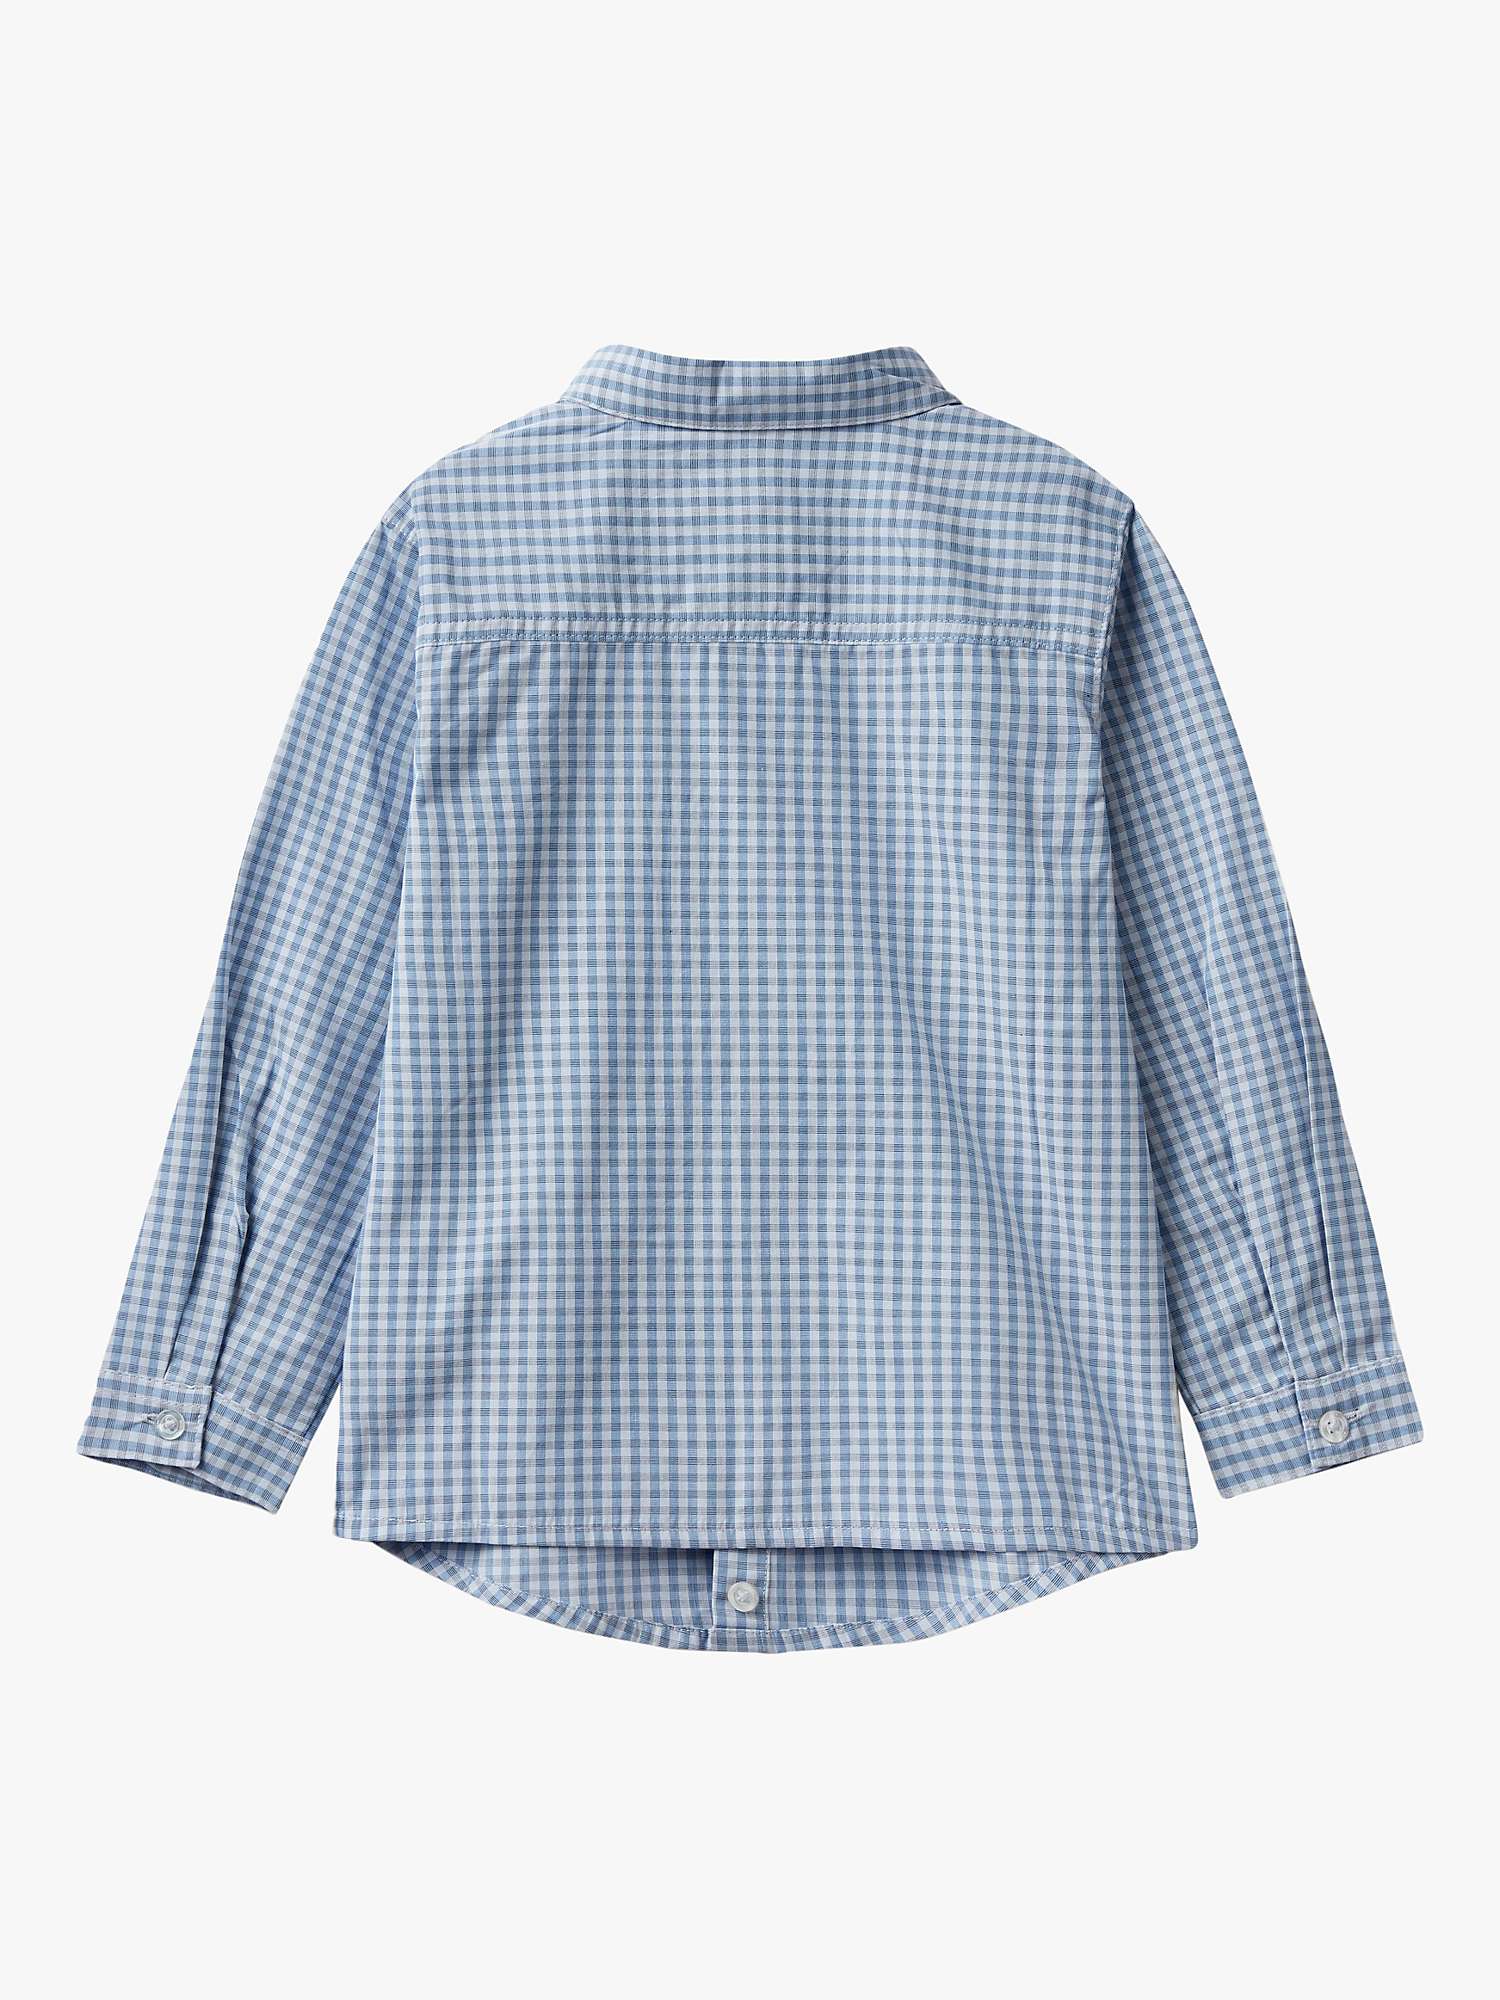 Buy Benetton Kids' Cotton Check Long Sleeve Shirt, Blue Online at johnlewis.com